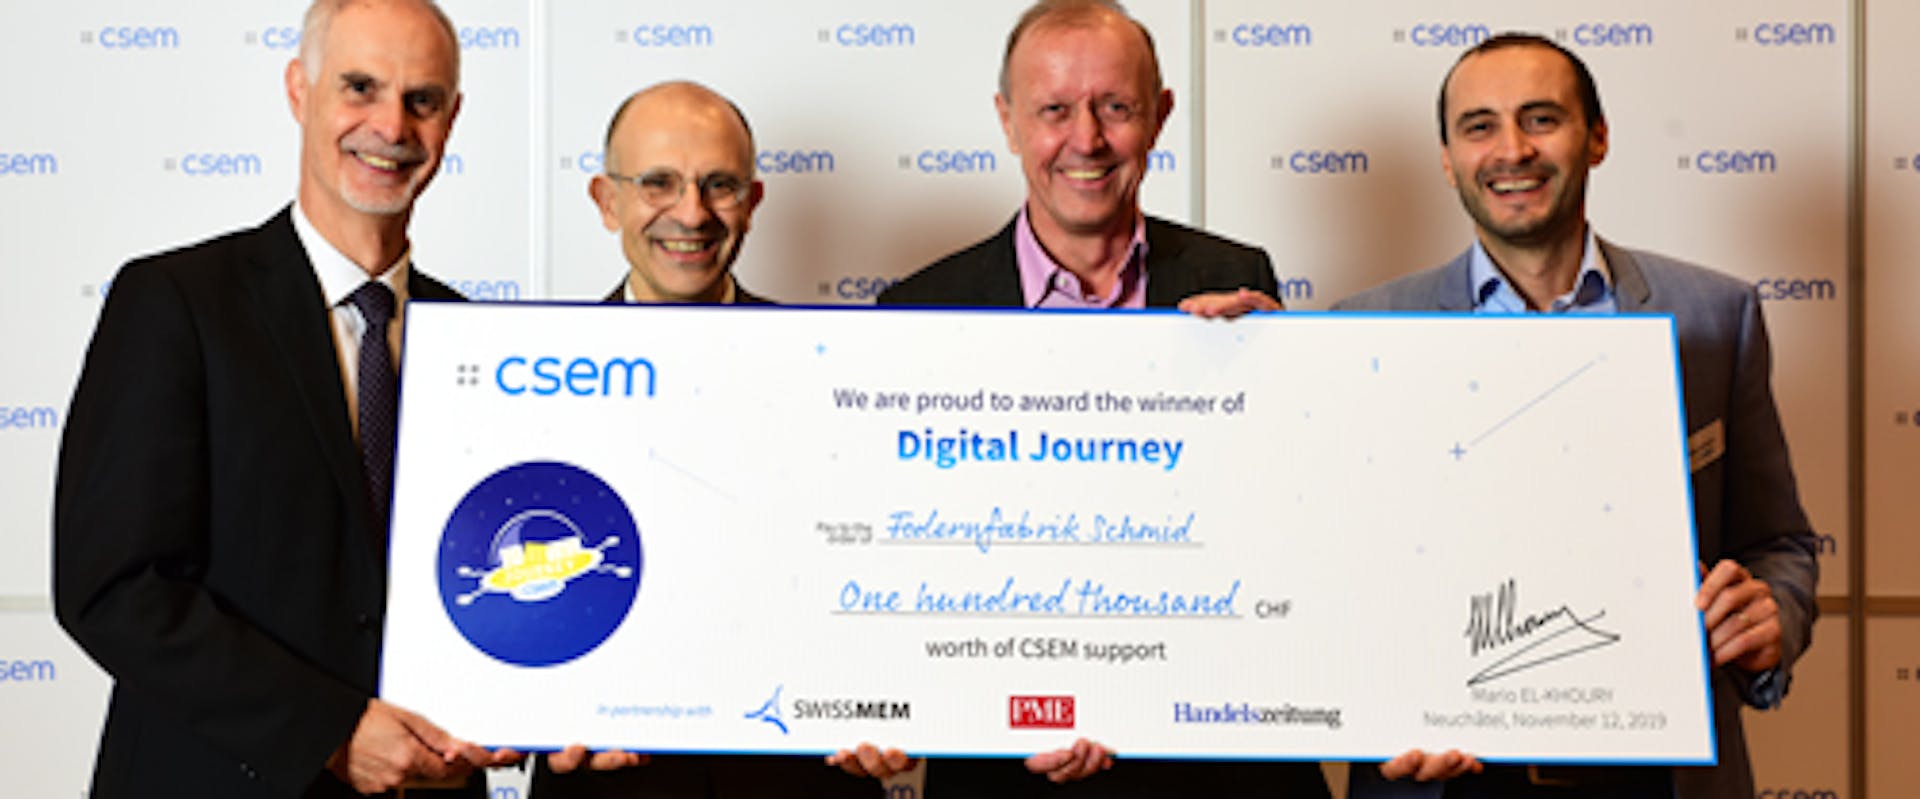 CSEM Digital Journey Winner, Mario El-Khoury, CSEM CEO, Georges Kotrotsios, CSEM, Albert Enste, Federnfabrik Schmid, Bahaa Roustom, CSEM